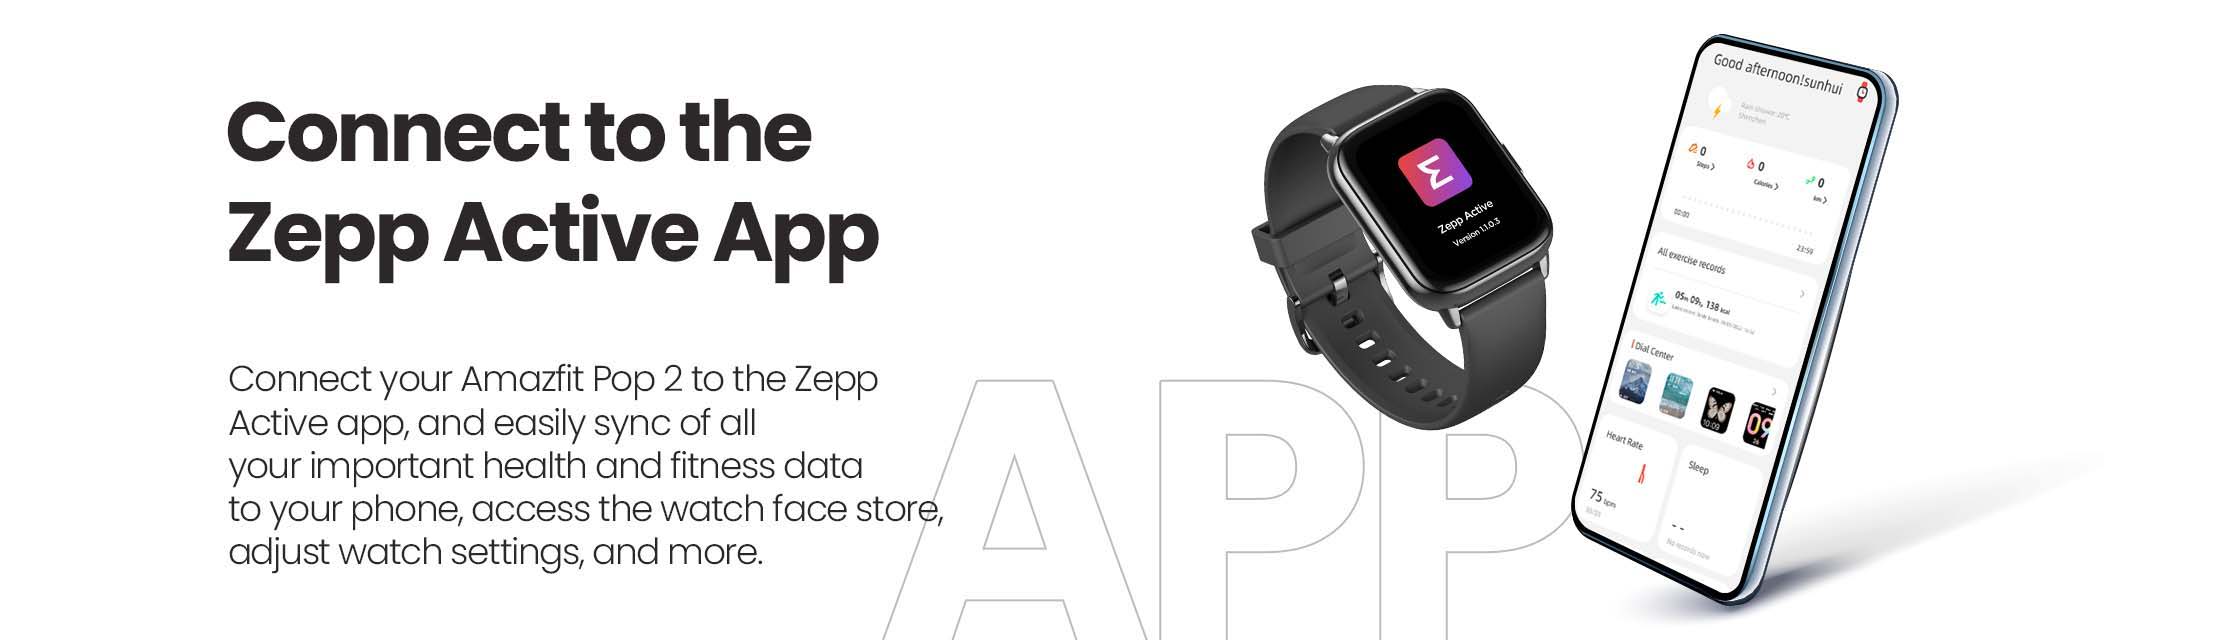 Amazfit Pop 2 Smartwatch